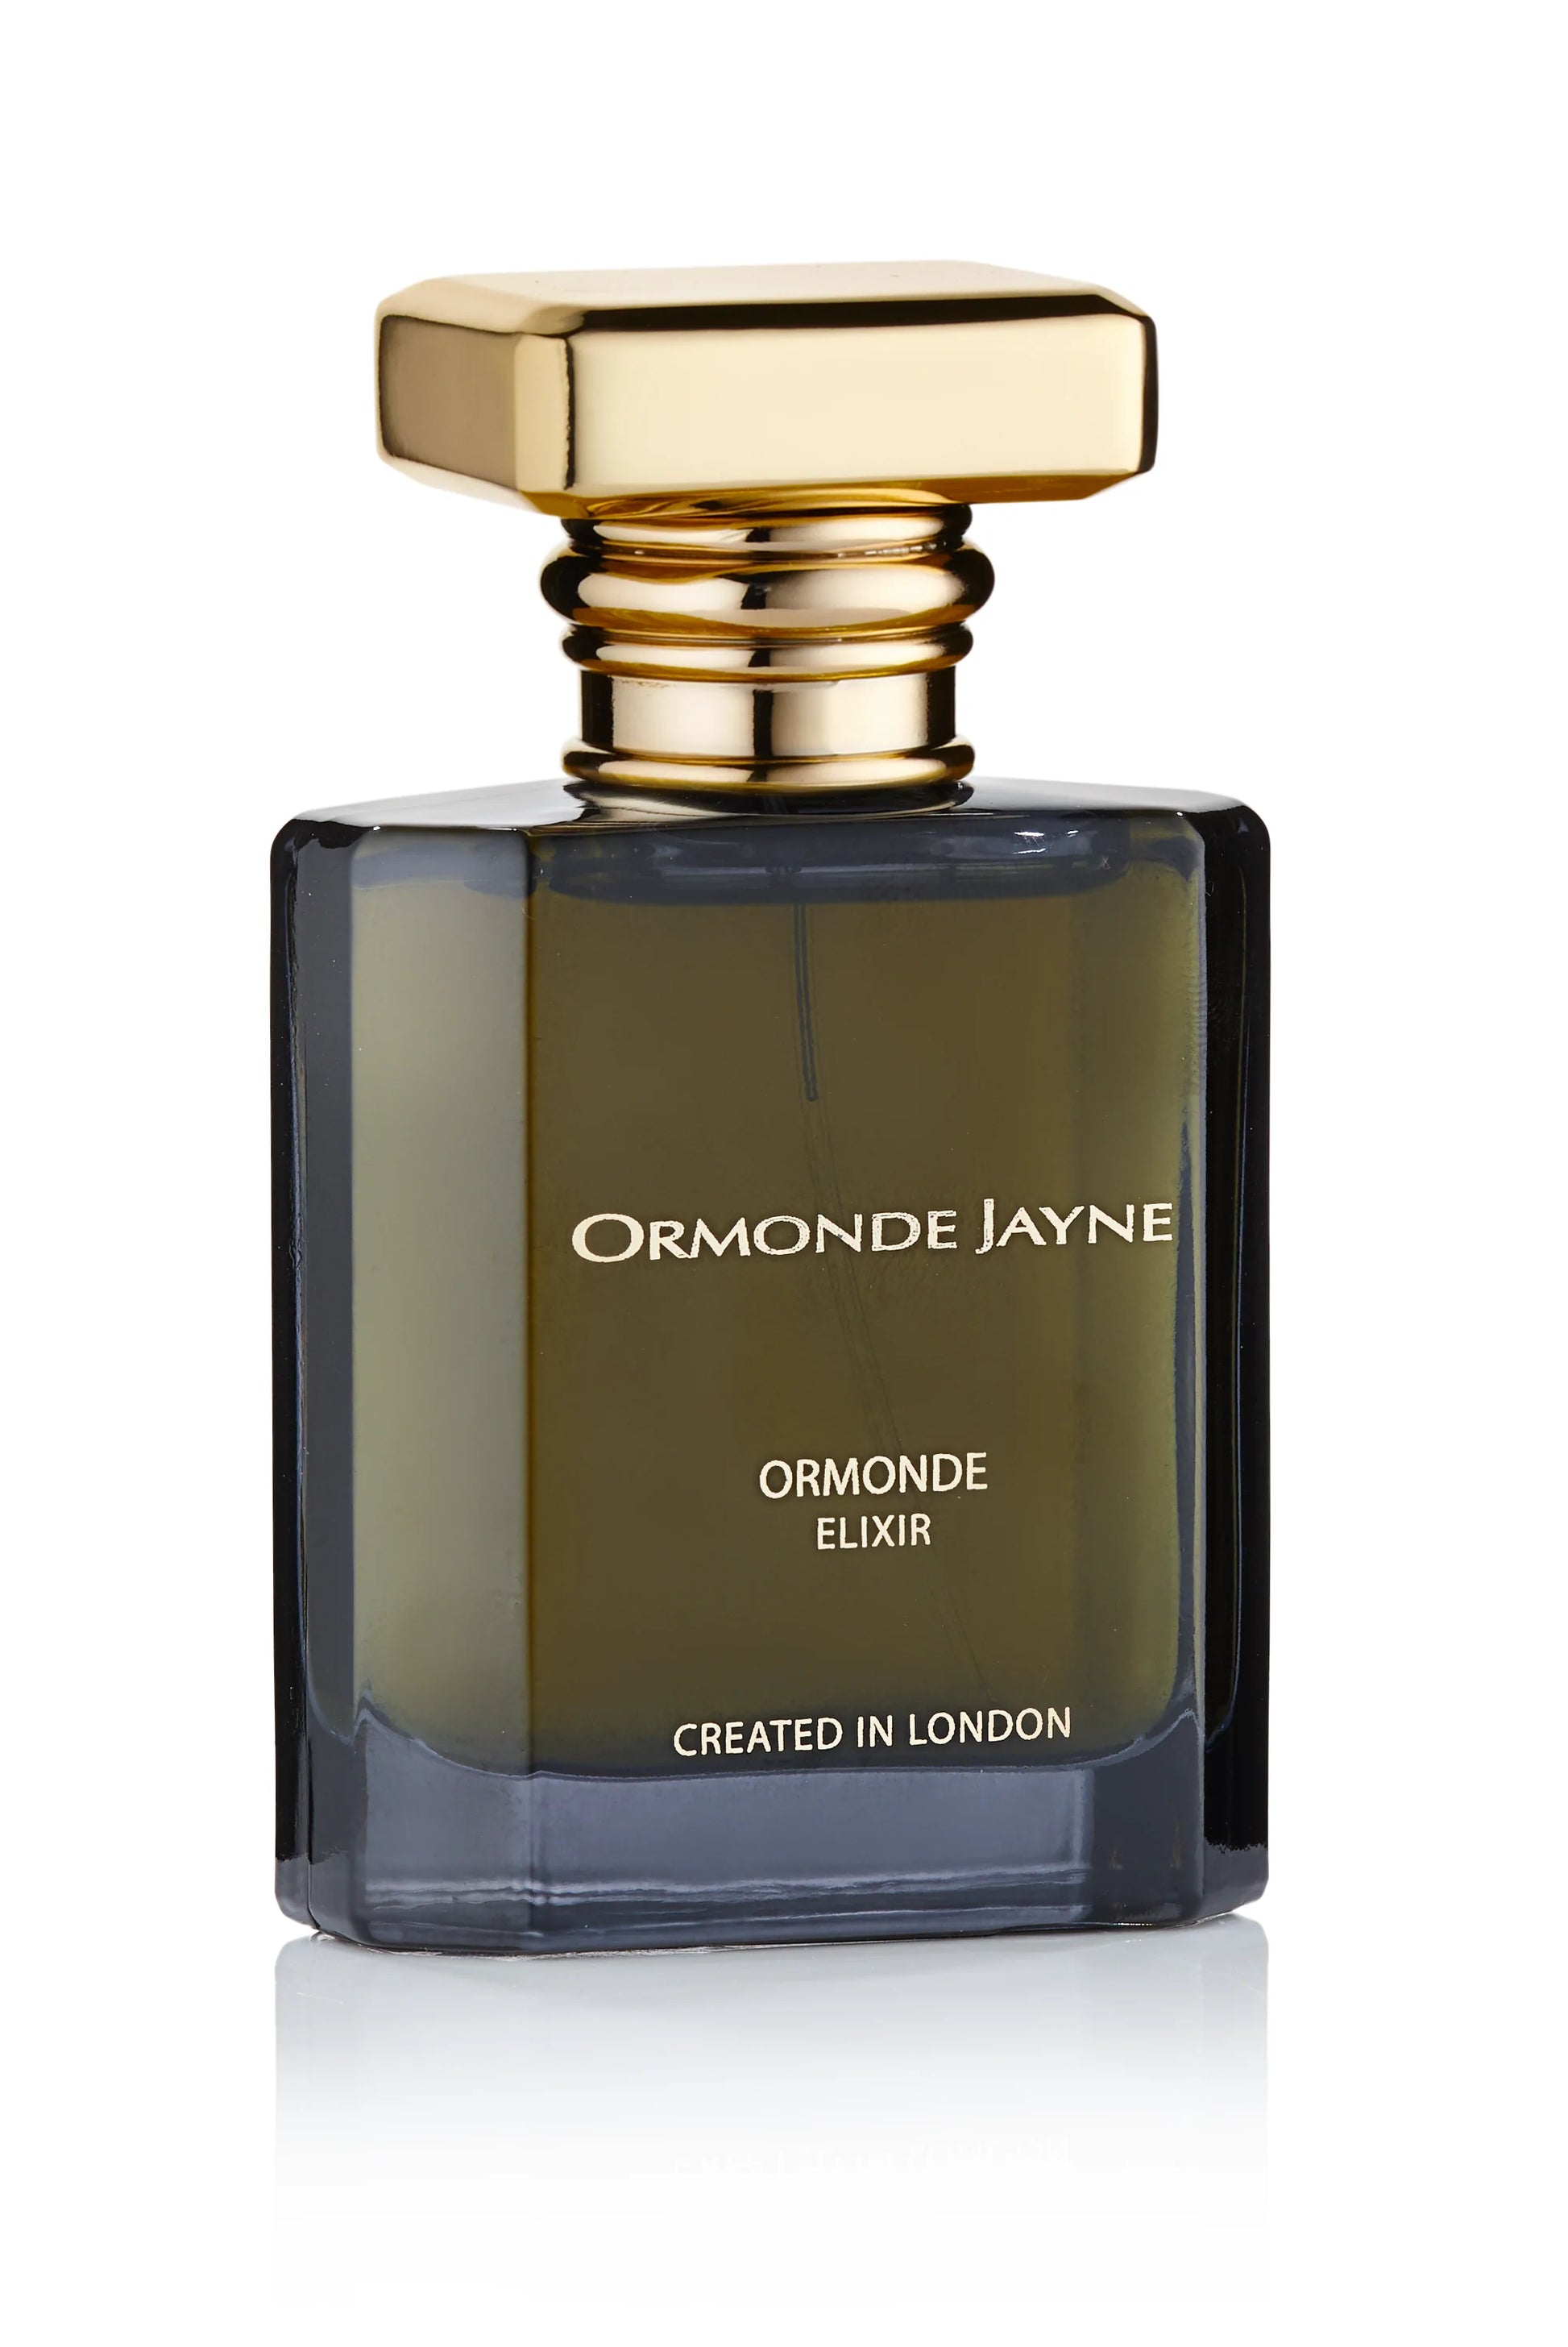 Ormonde Jayne Ormonde Elixir 2ml 0.06 fl。 オンス公式香りサンプル